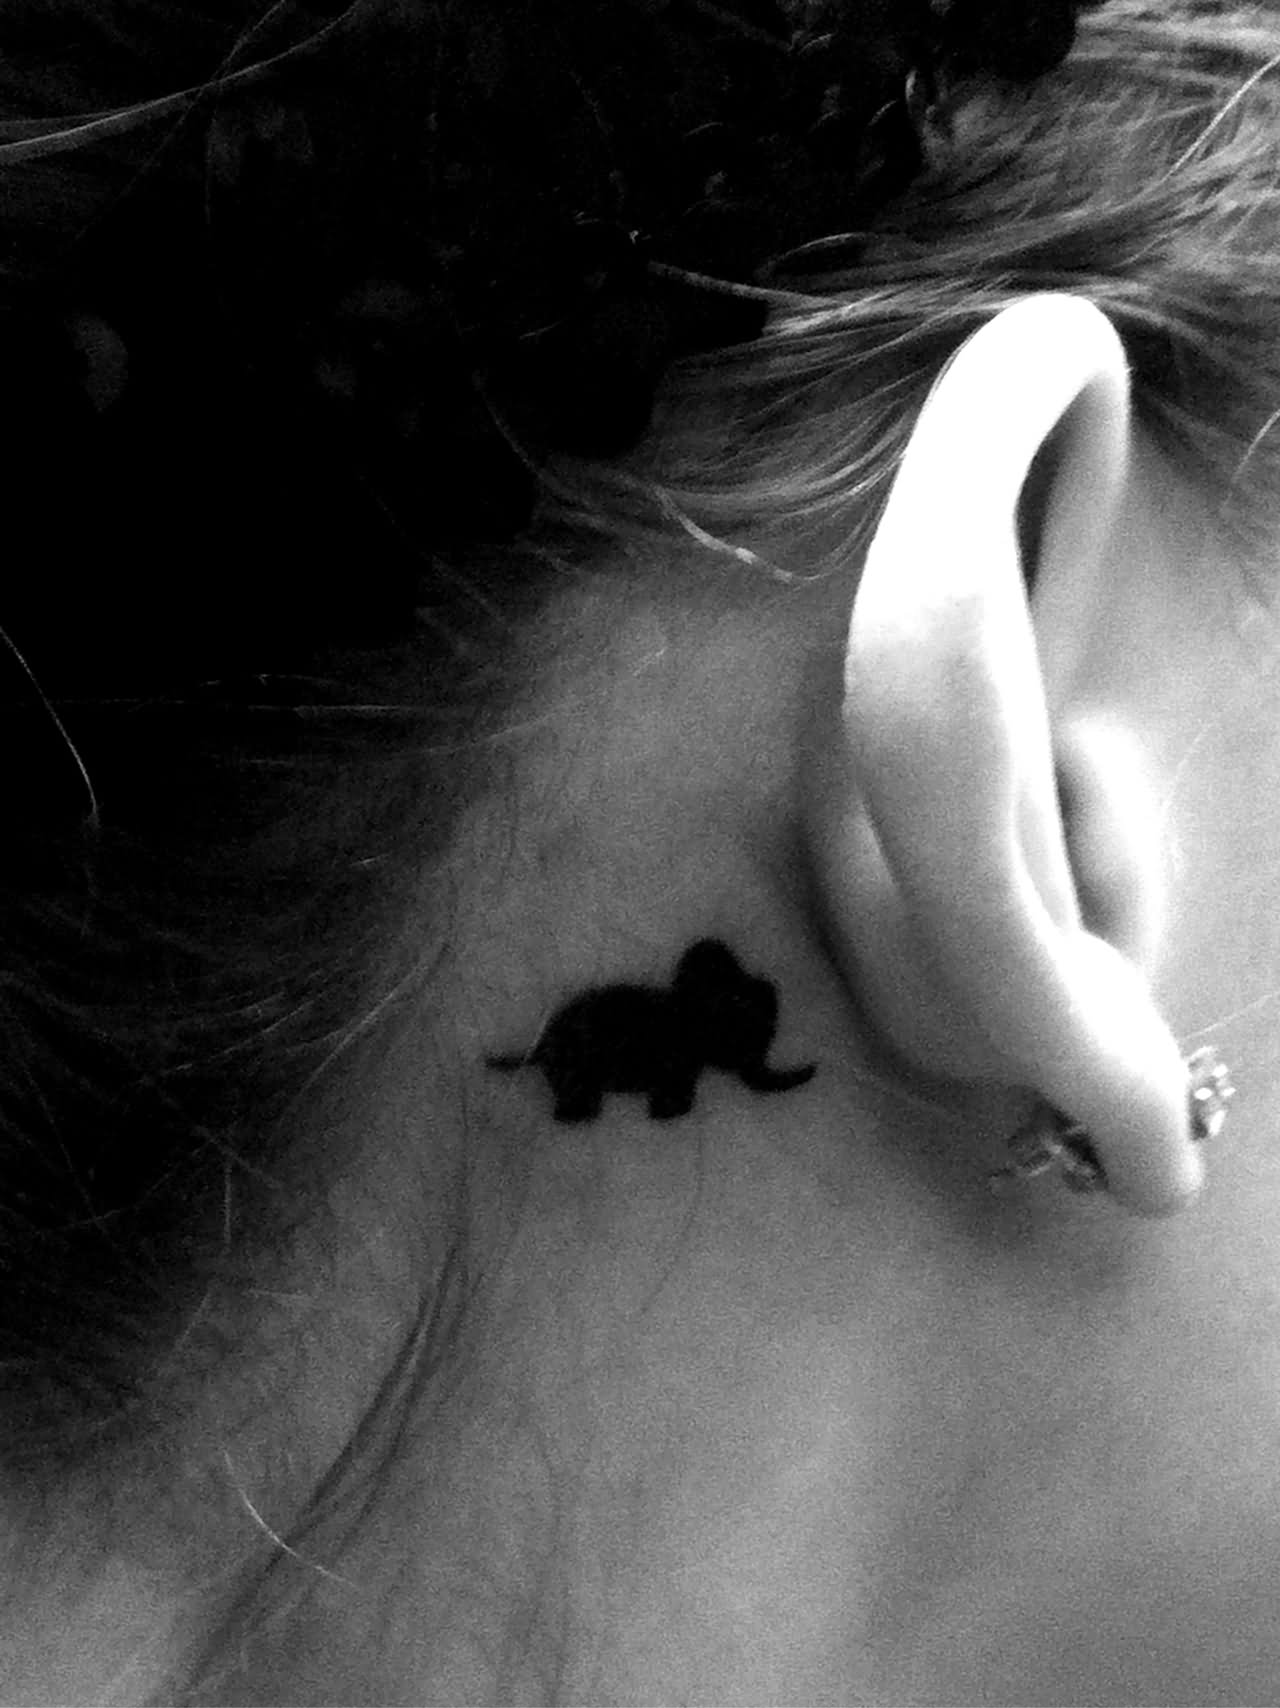 Silhouette Tiny Elephant Tattoo On Girl Behind The Ear